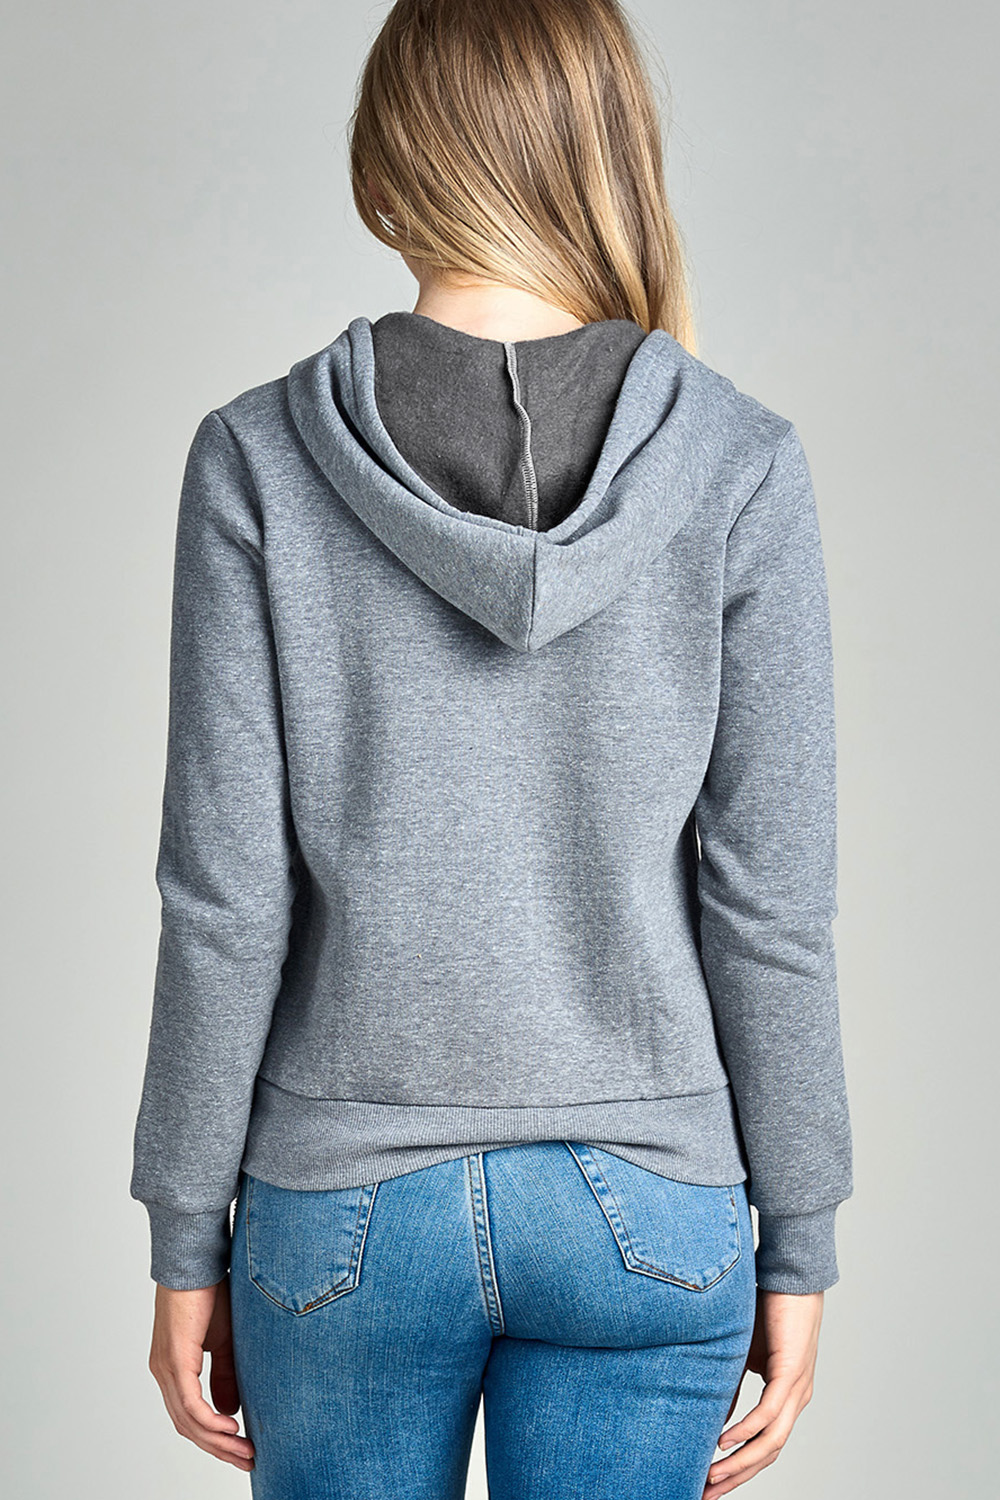 Women's Basic Zip Up Fleece Hoodie Jacket Lightweight w/ Pockets | eBay